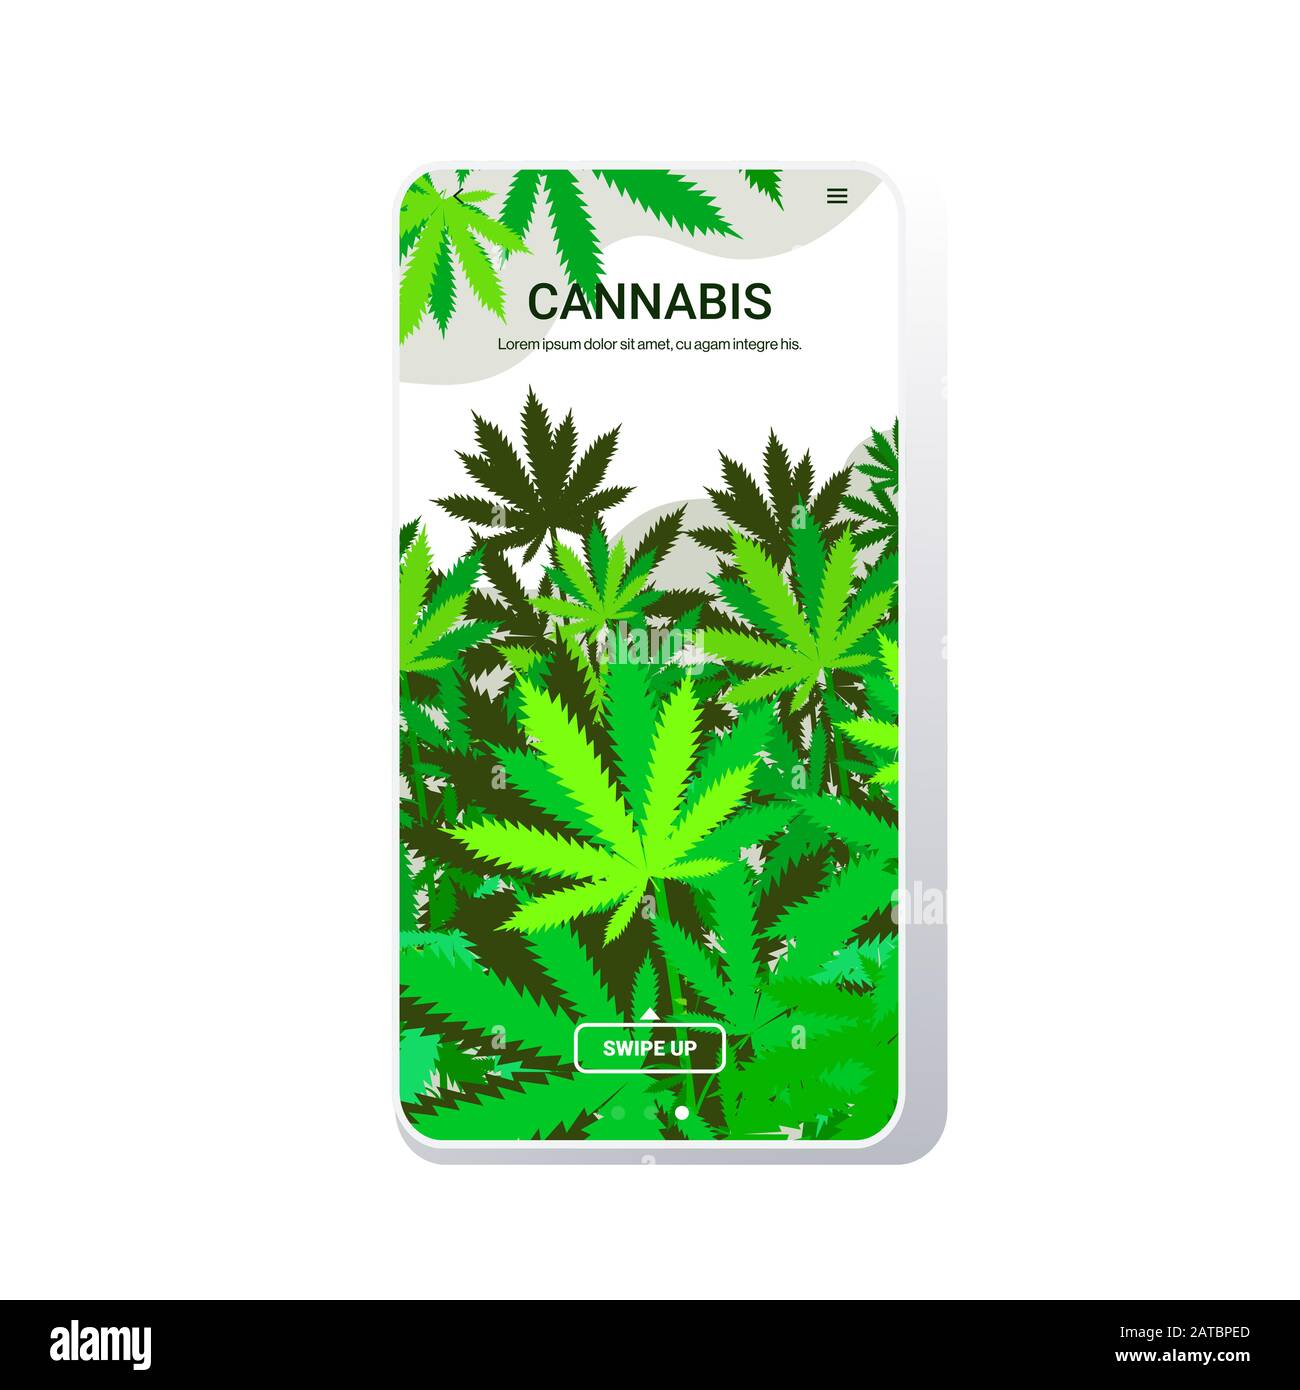 Cannabis verlässt industrielle Hanfplantage Marihuana-Pflanze kommerzielles Geschäft Drogenkonsumkonzept Smartphone-Bildschirm mobile App Kopieren Raum Vektor Illustration Stock Vektor